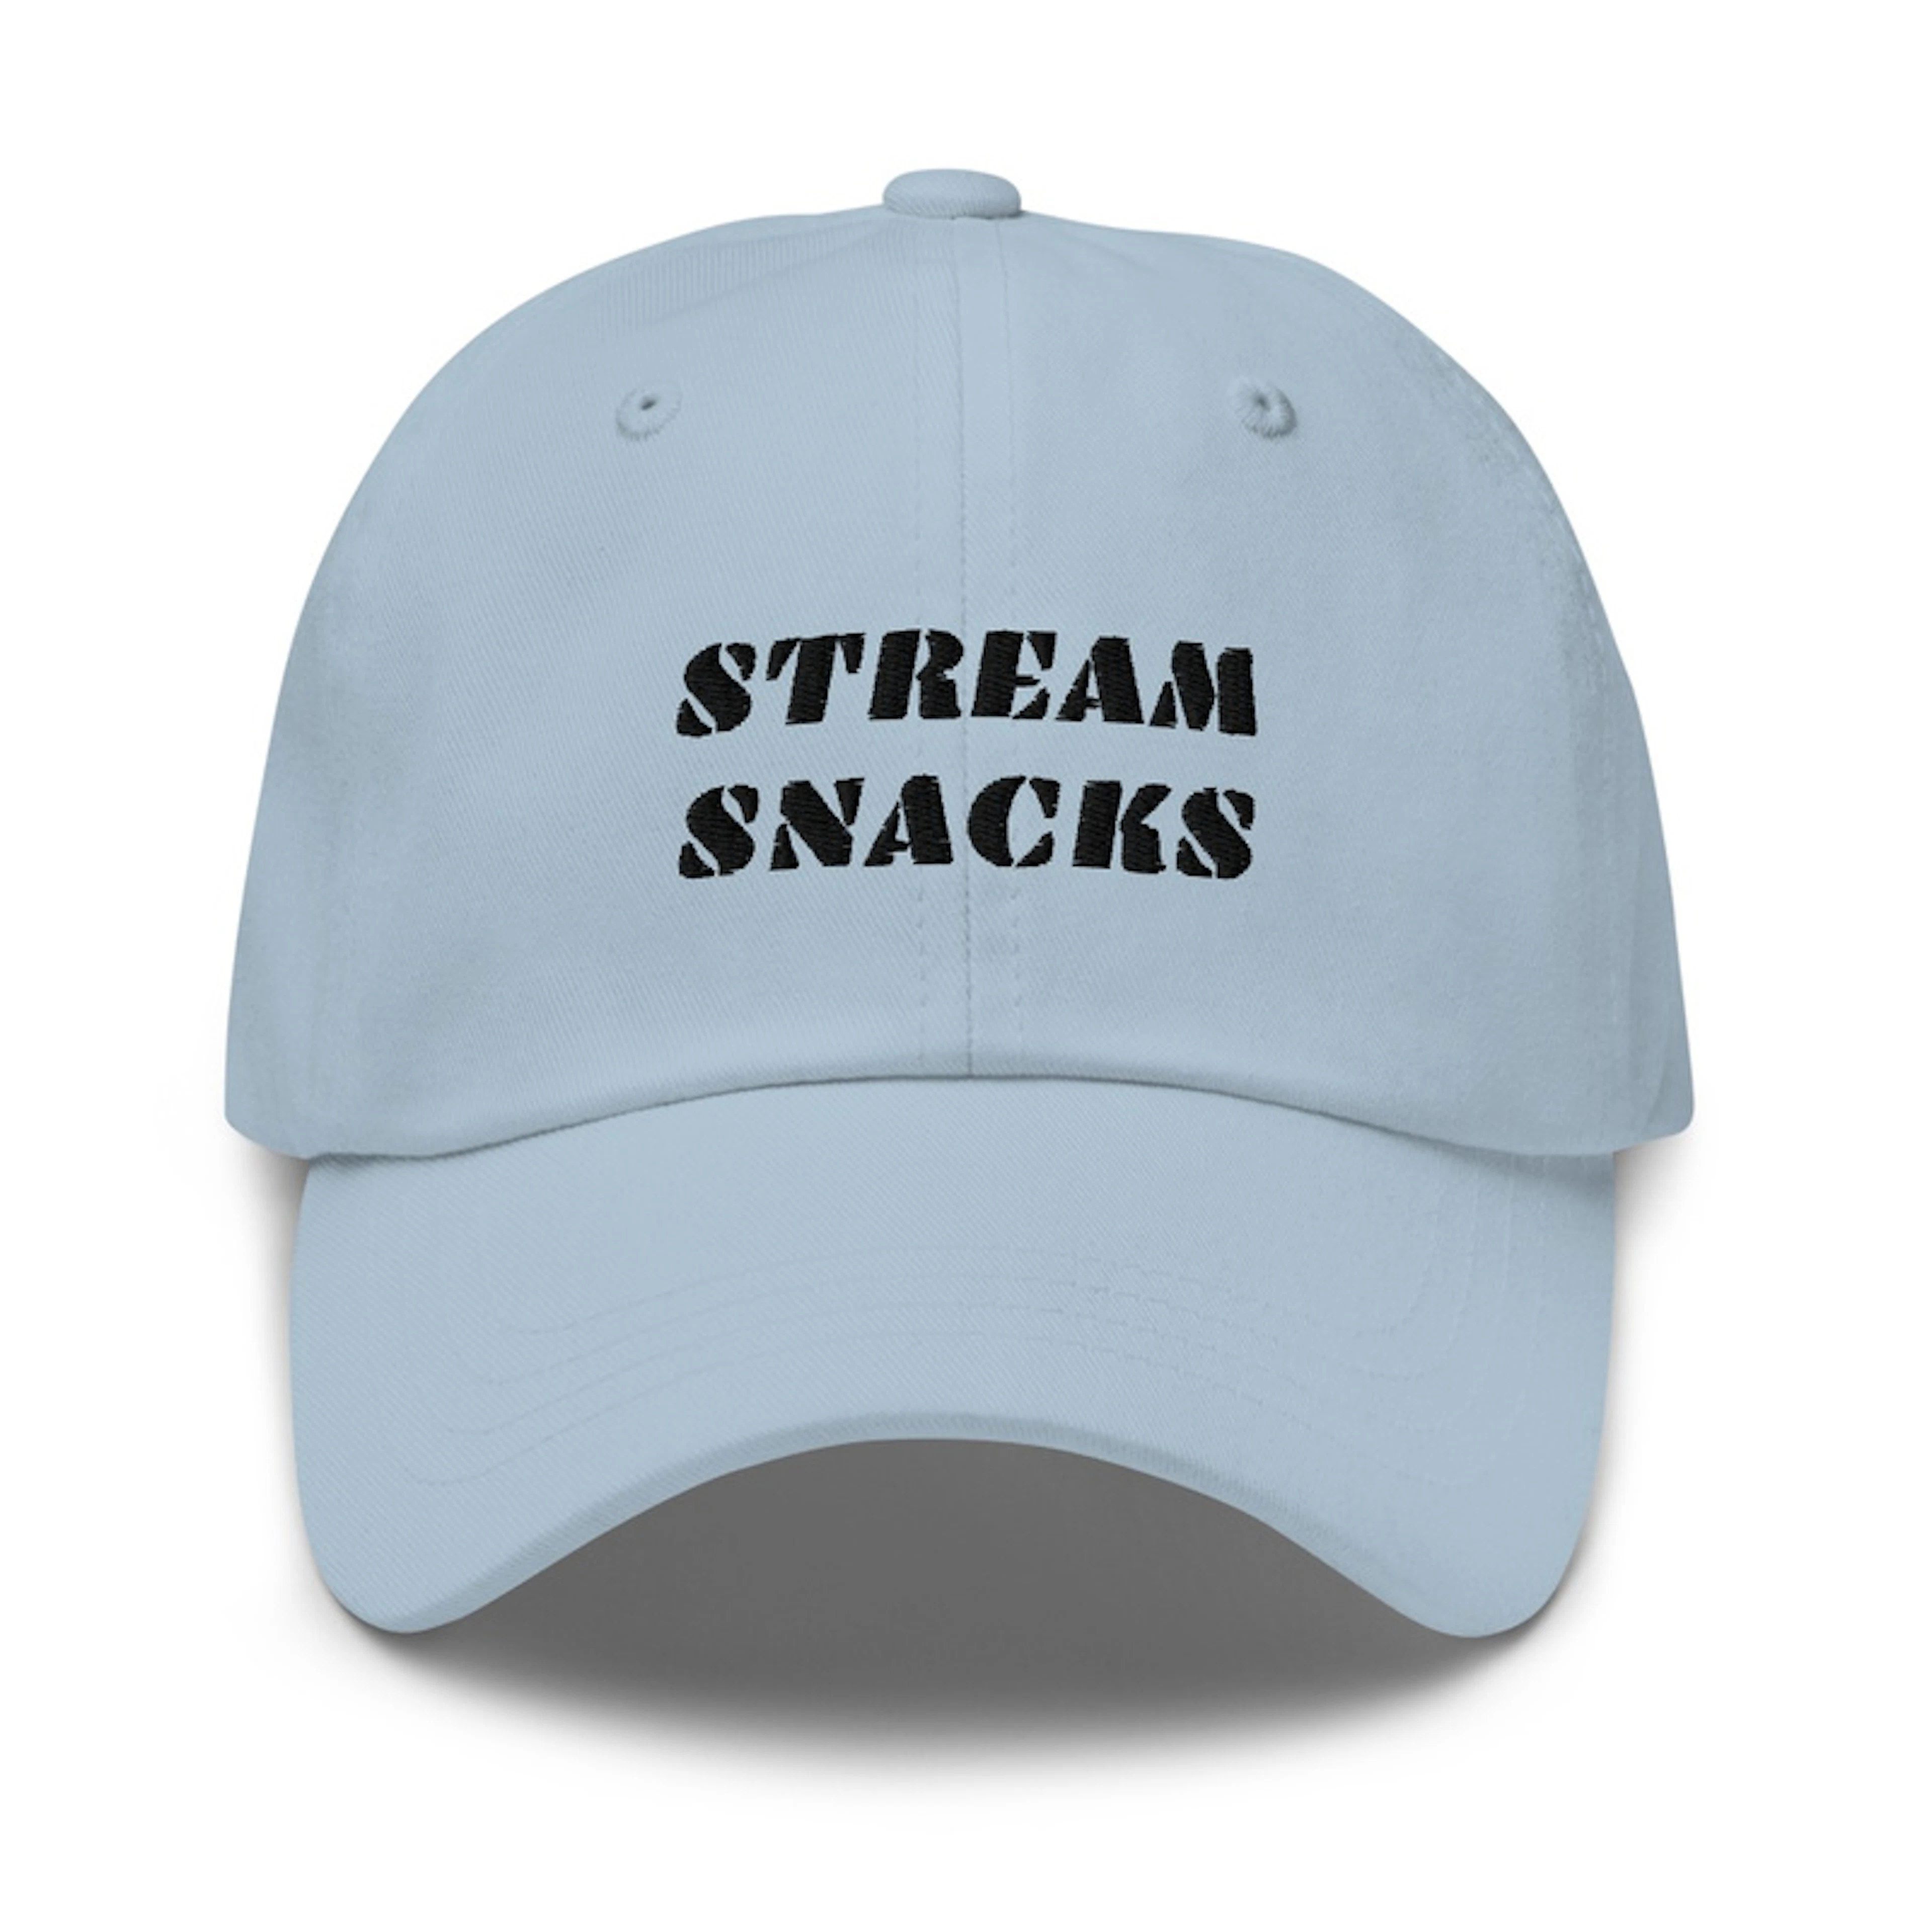 Stream Snacks - Dad Cap (LIGHT)